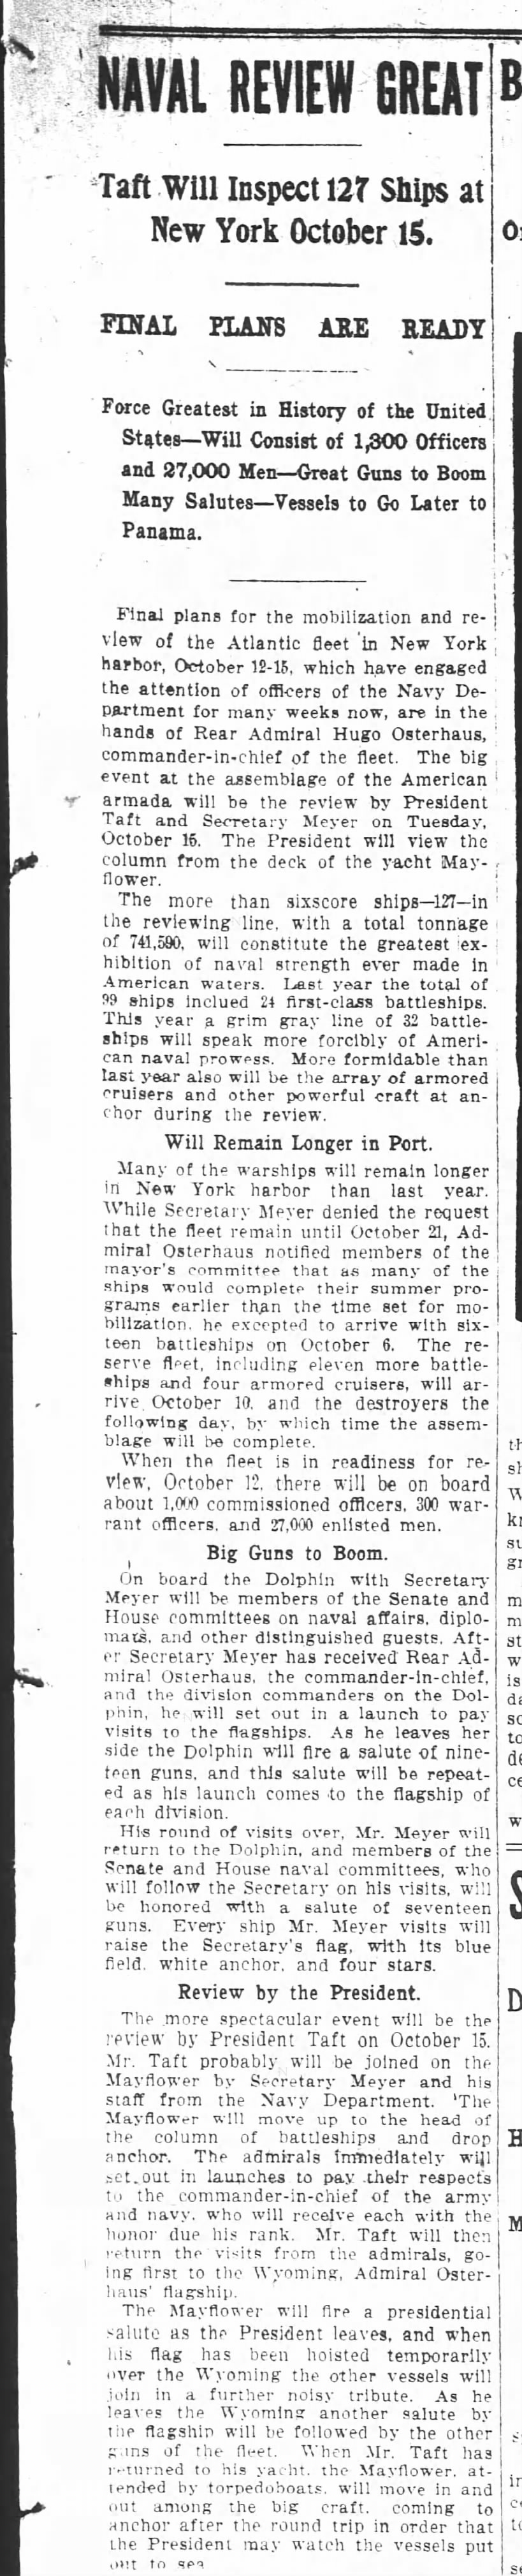 Taft's Naval Review in 1912, 127 ships